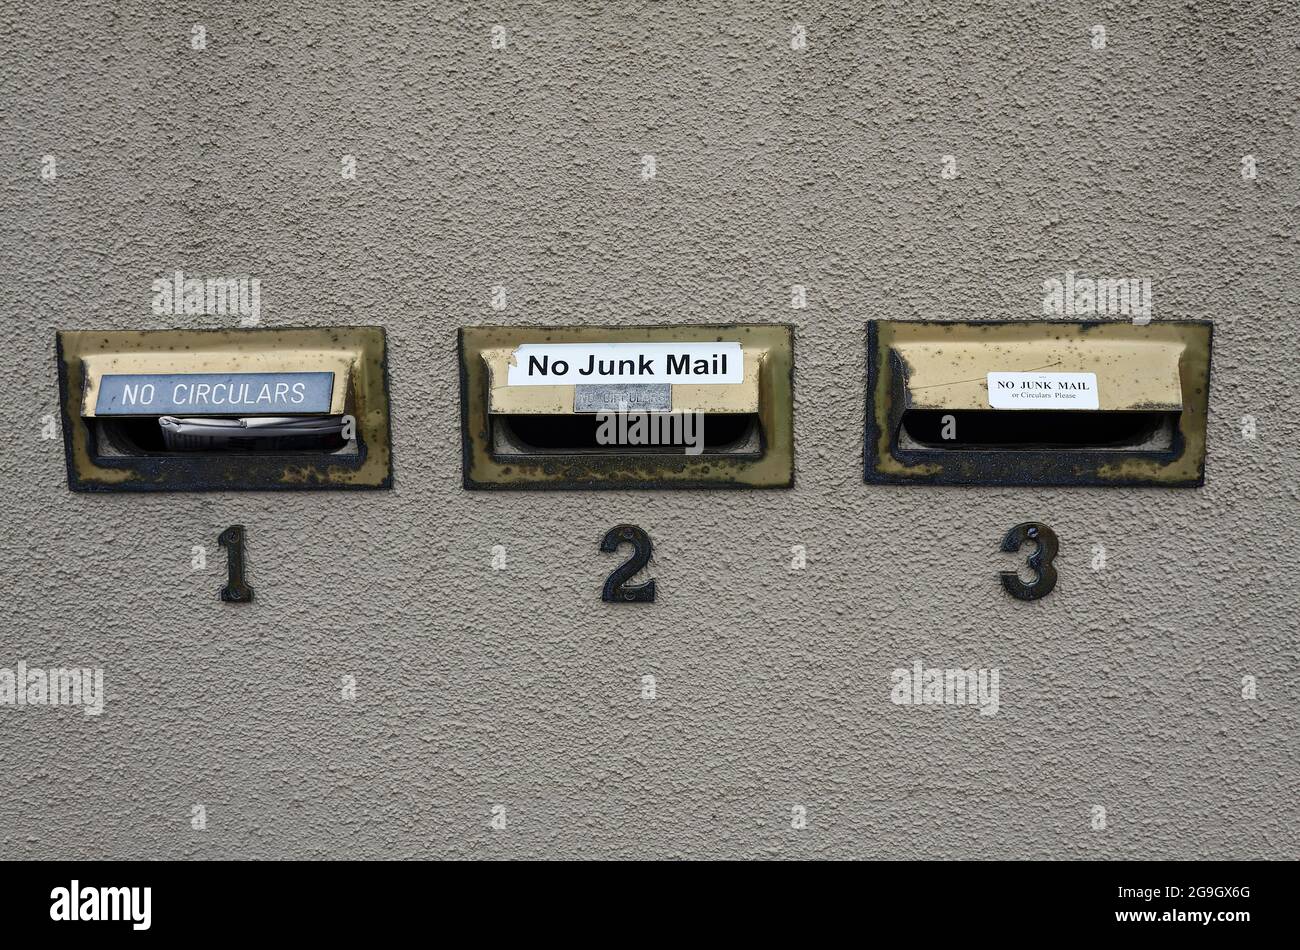 No Circulars, No Junk Mail signs, 3 mail box slots, rough cement wall, text, words, Auckland, New Zealand Stock Photo